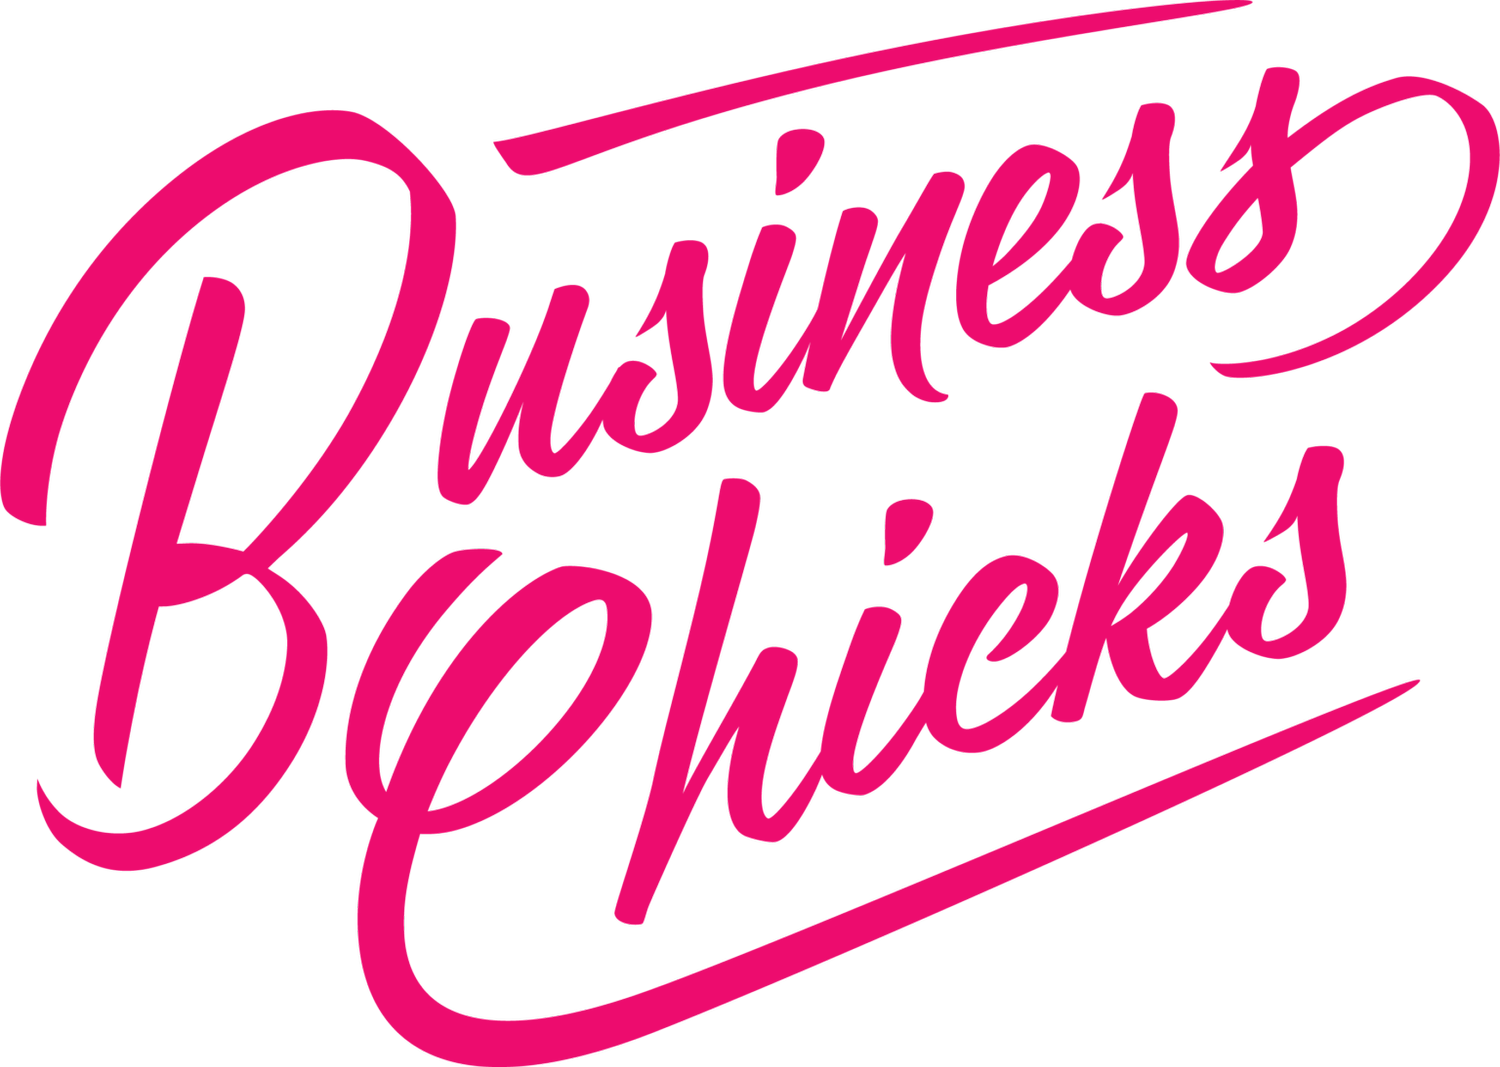 Business Chicks